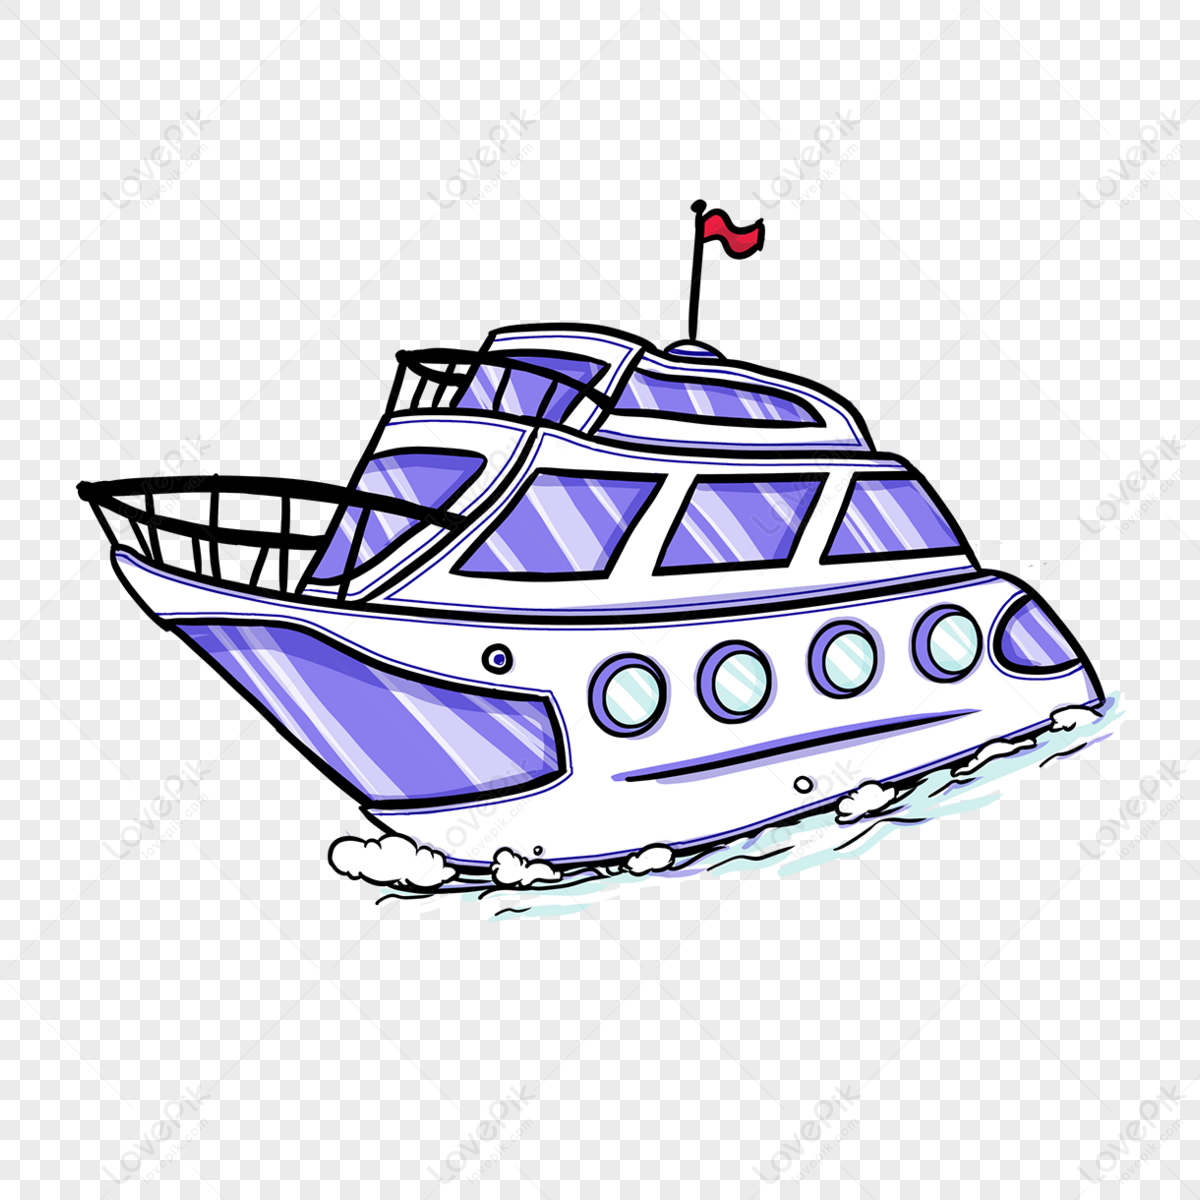 Cartoon style purple yacht mail ship,cruise ship,clip art png image